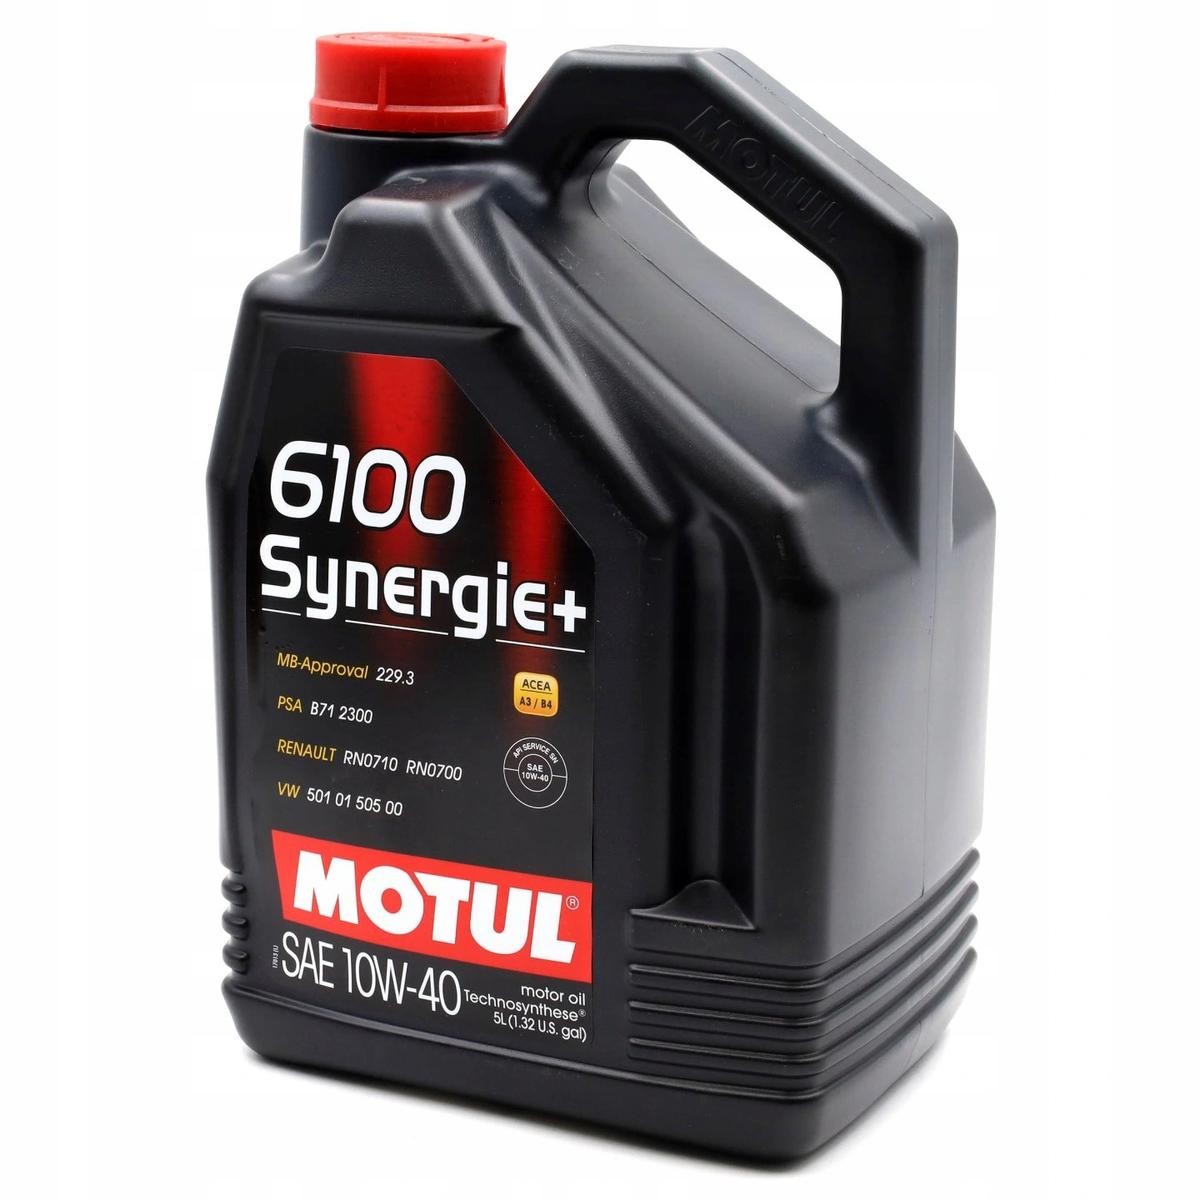 MOTUL 6100, SYNERGIE+ 10W-40, 5l Motorenöl 108647 online kaufen